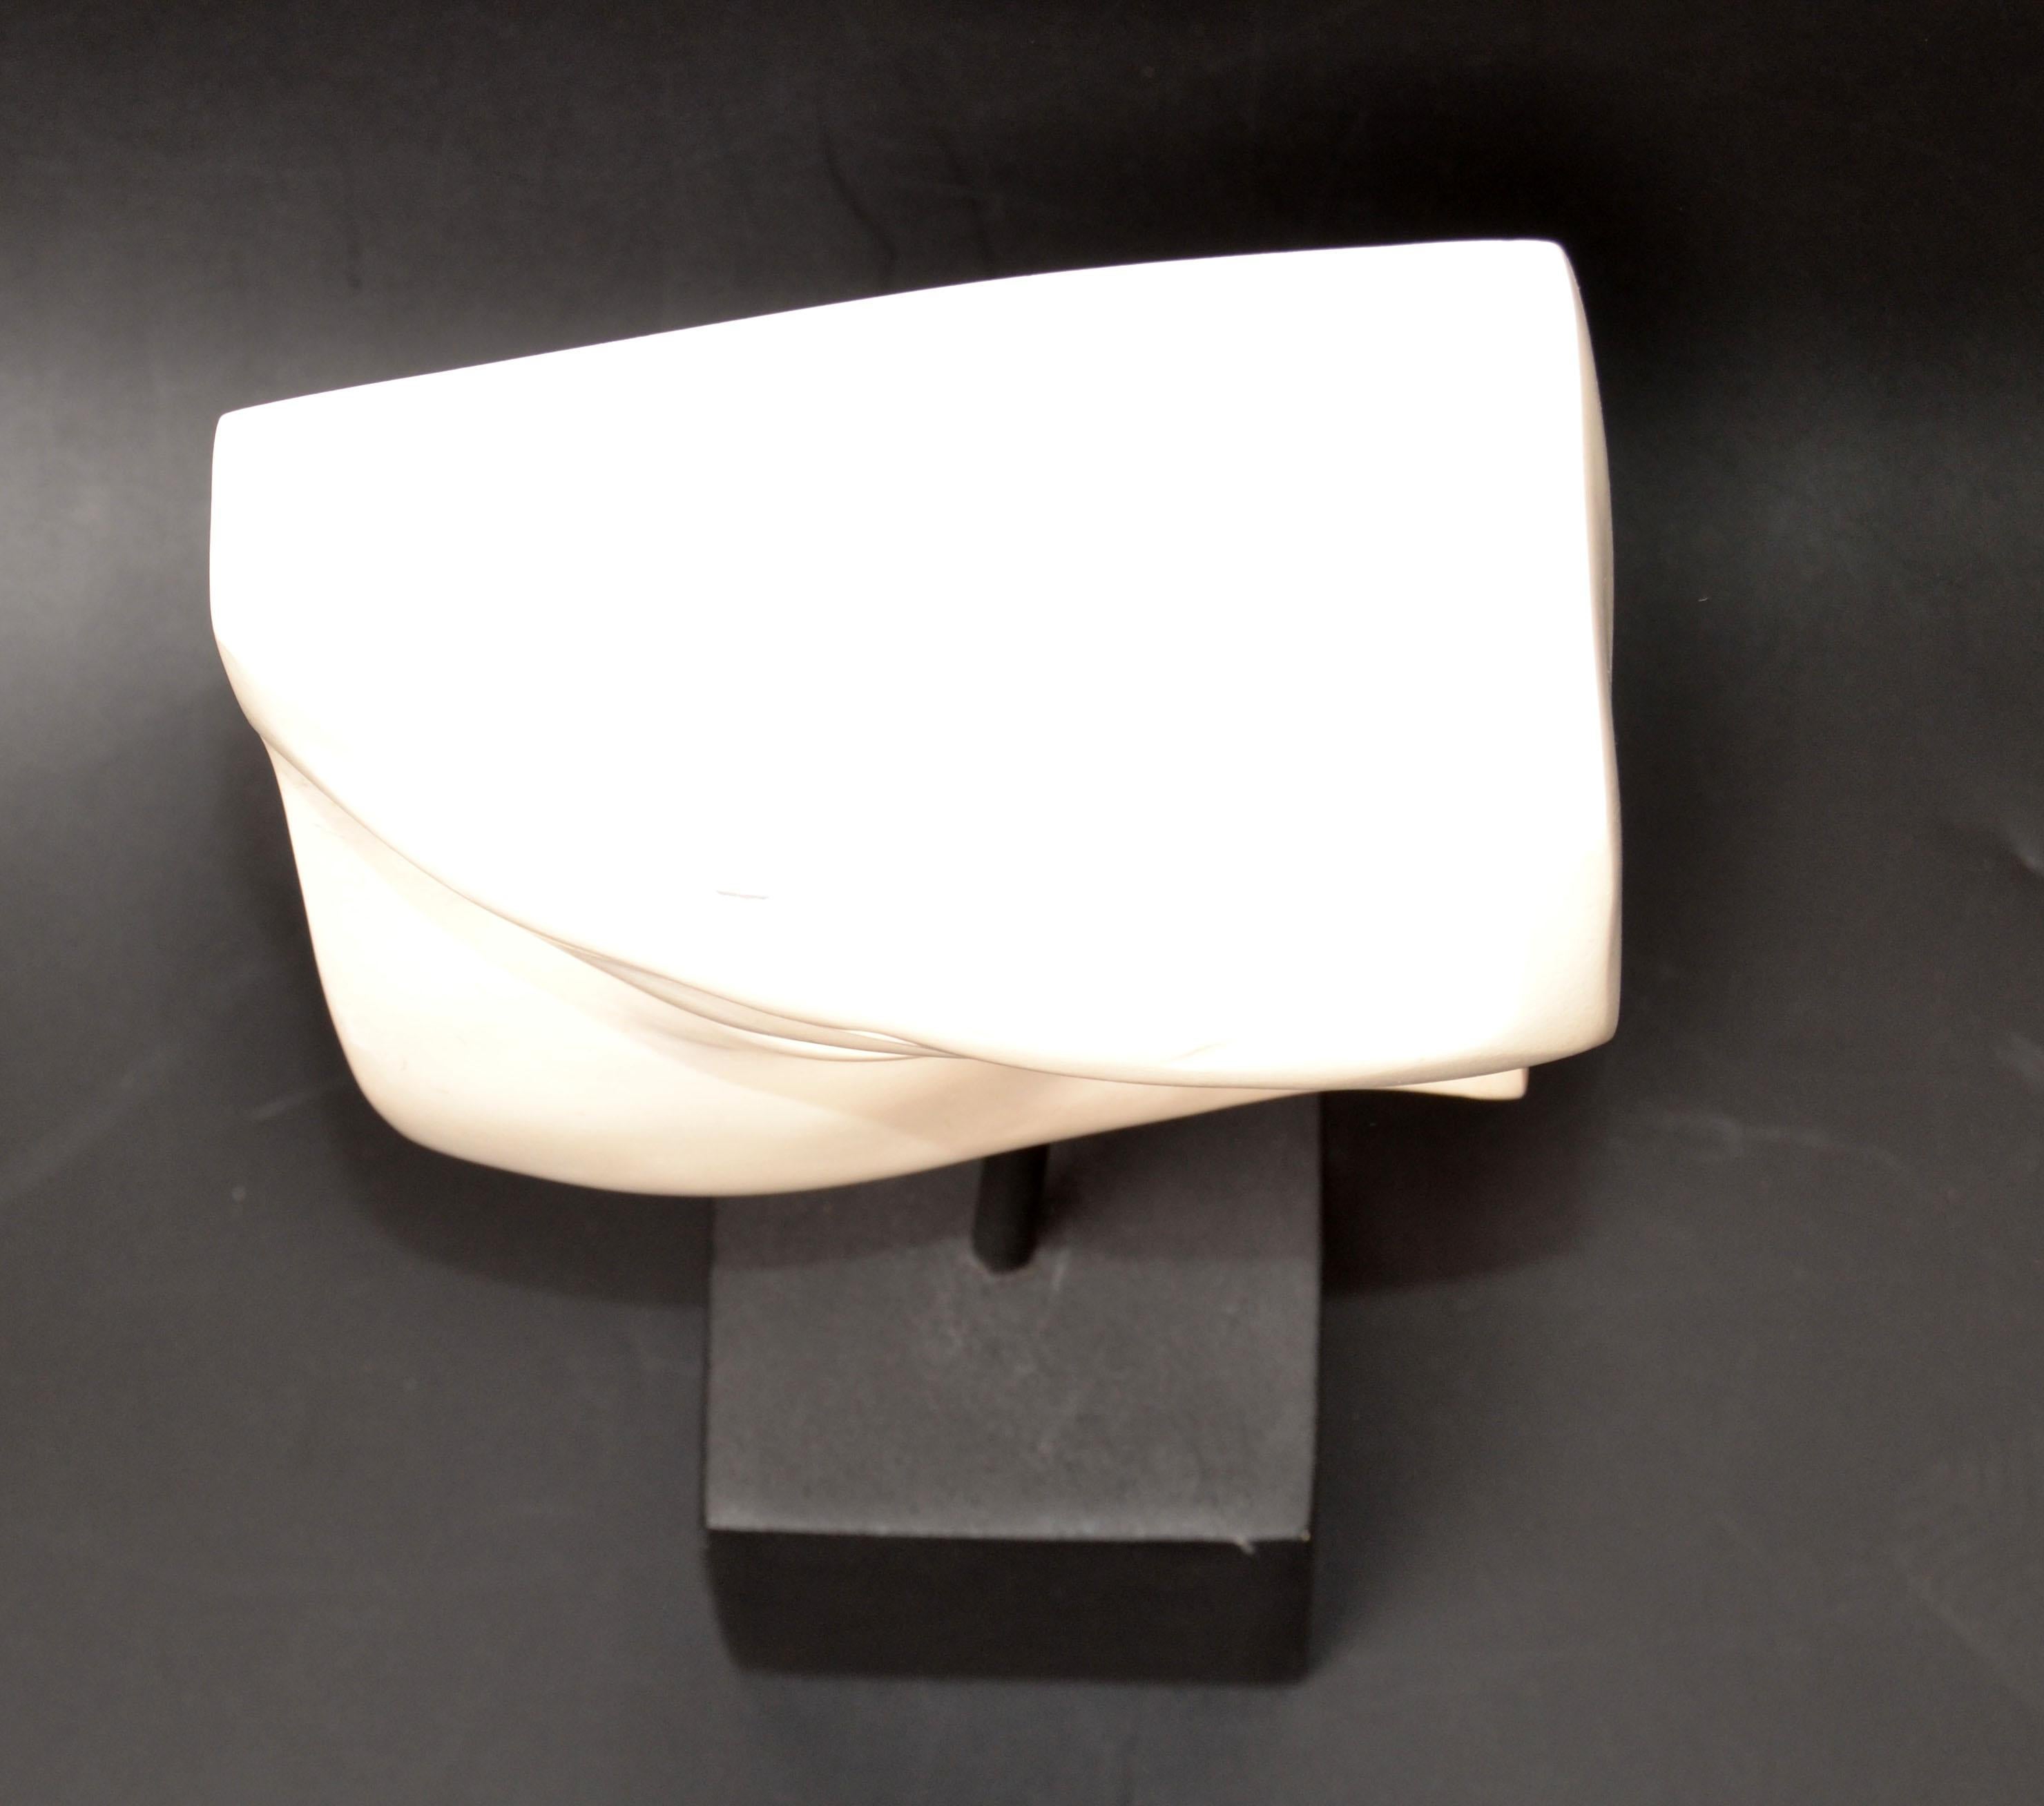 Missing Eye of David Black & White Sculpture Plaster on Wood Mid-Century Modern For Sale 3